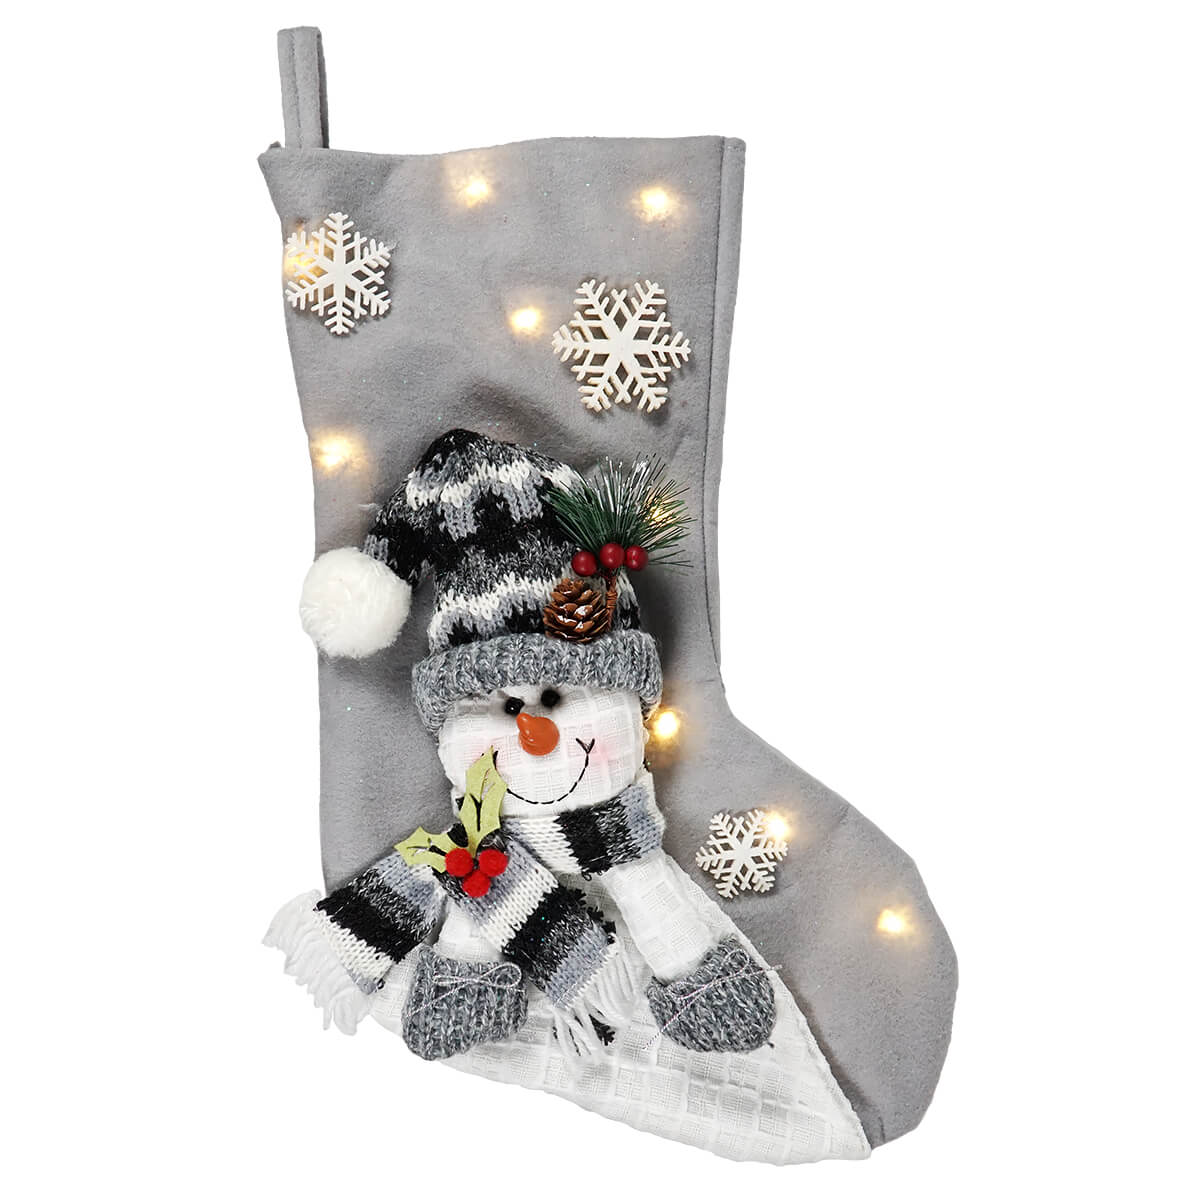 Lighted Fabric Snowman in Tassel Cap Snowflake Stocking